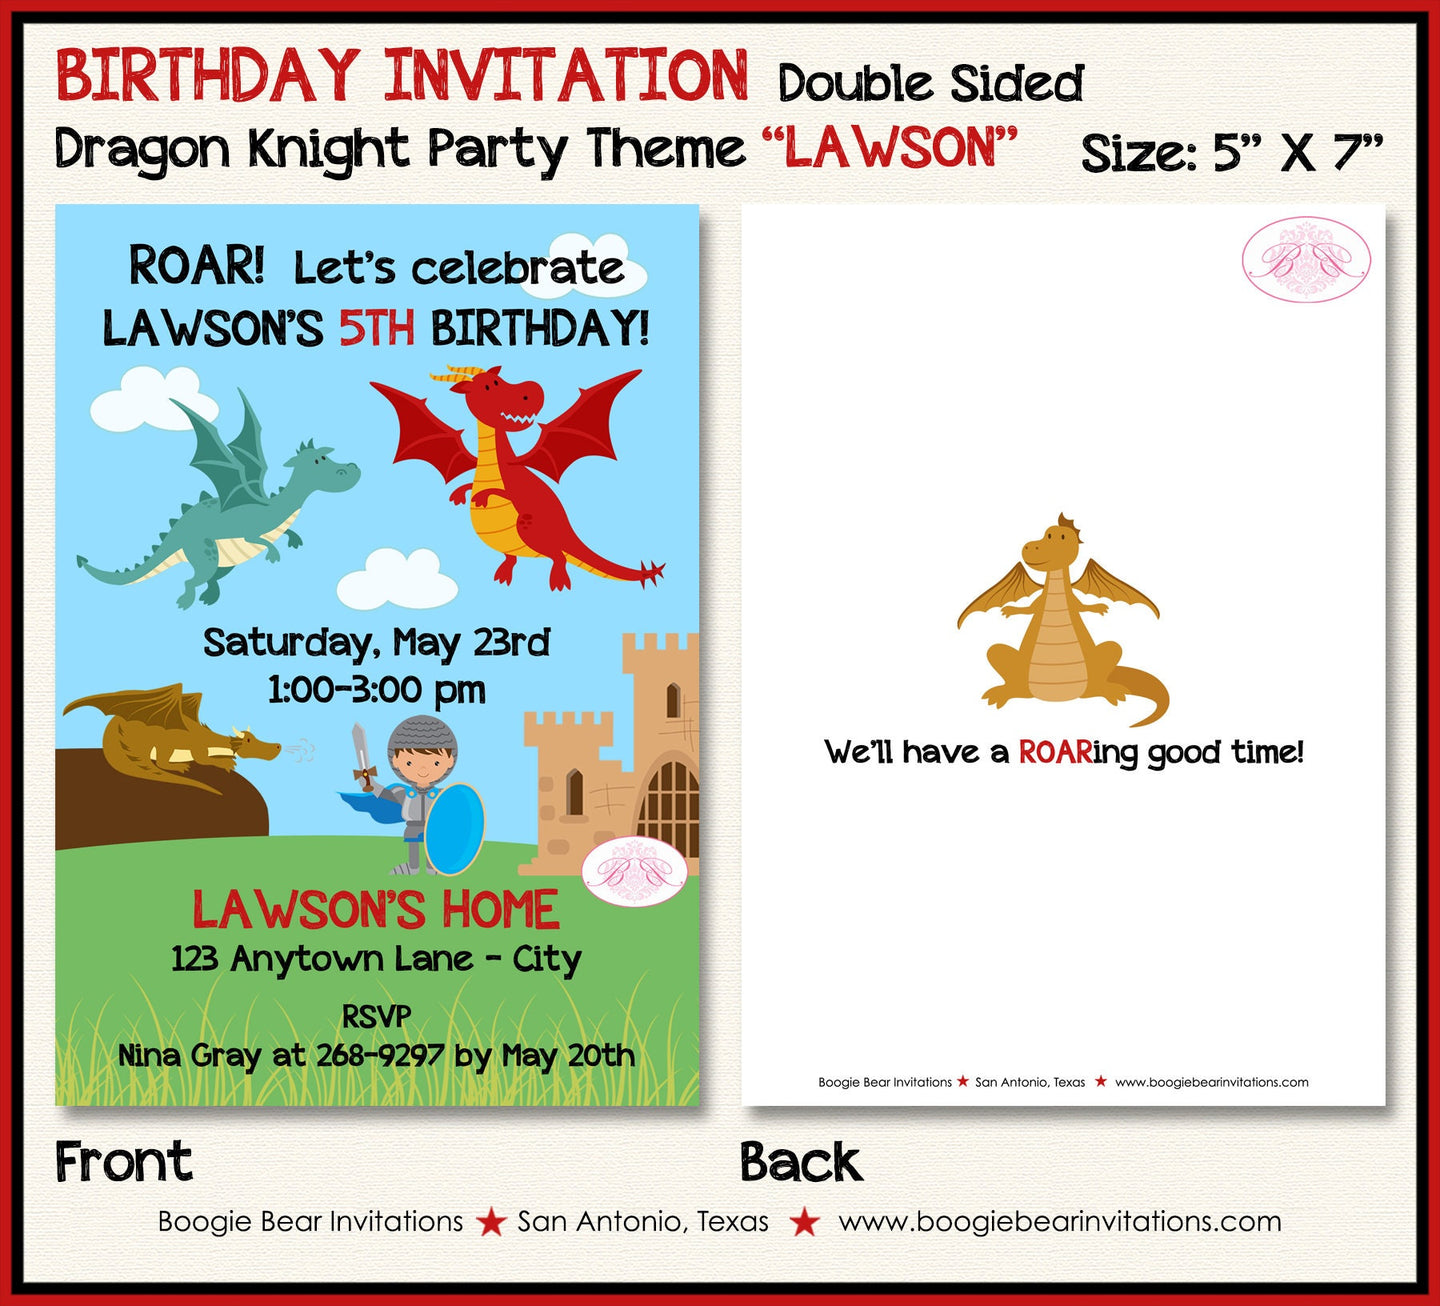 Dragon Knight Birthday Party Invitation Castle Shield Brave Sword Boy Girl Boogie Bear Invitations Lawson Theme Paperless Printable Printed